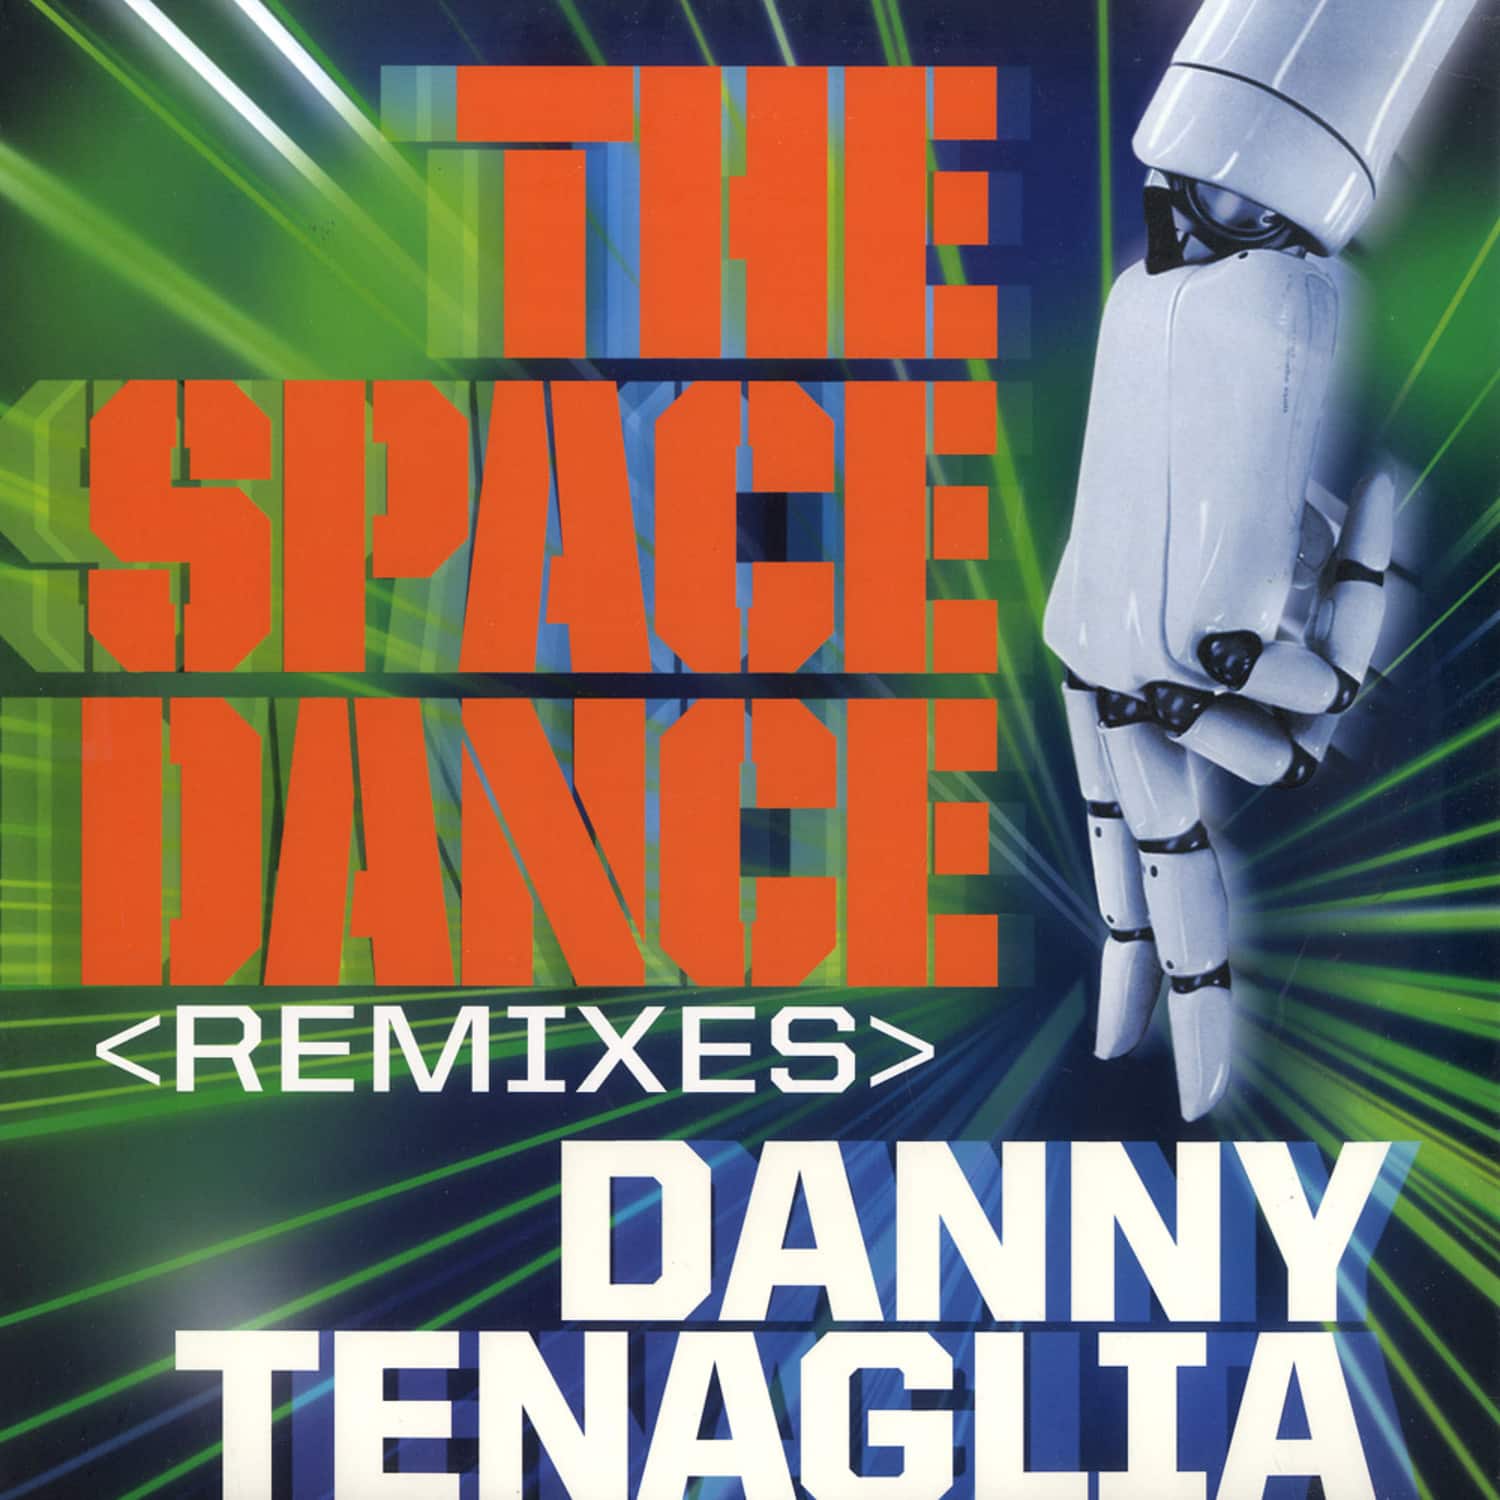 Danny Tenaglia - THE SPACE DANCE REMIXES 